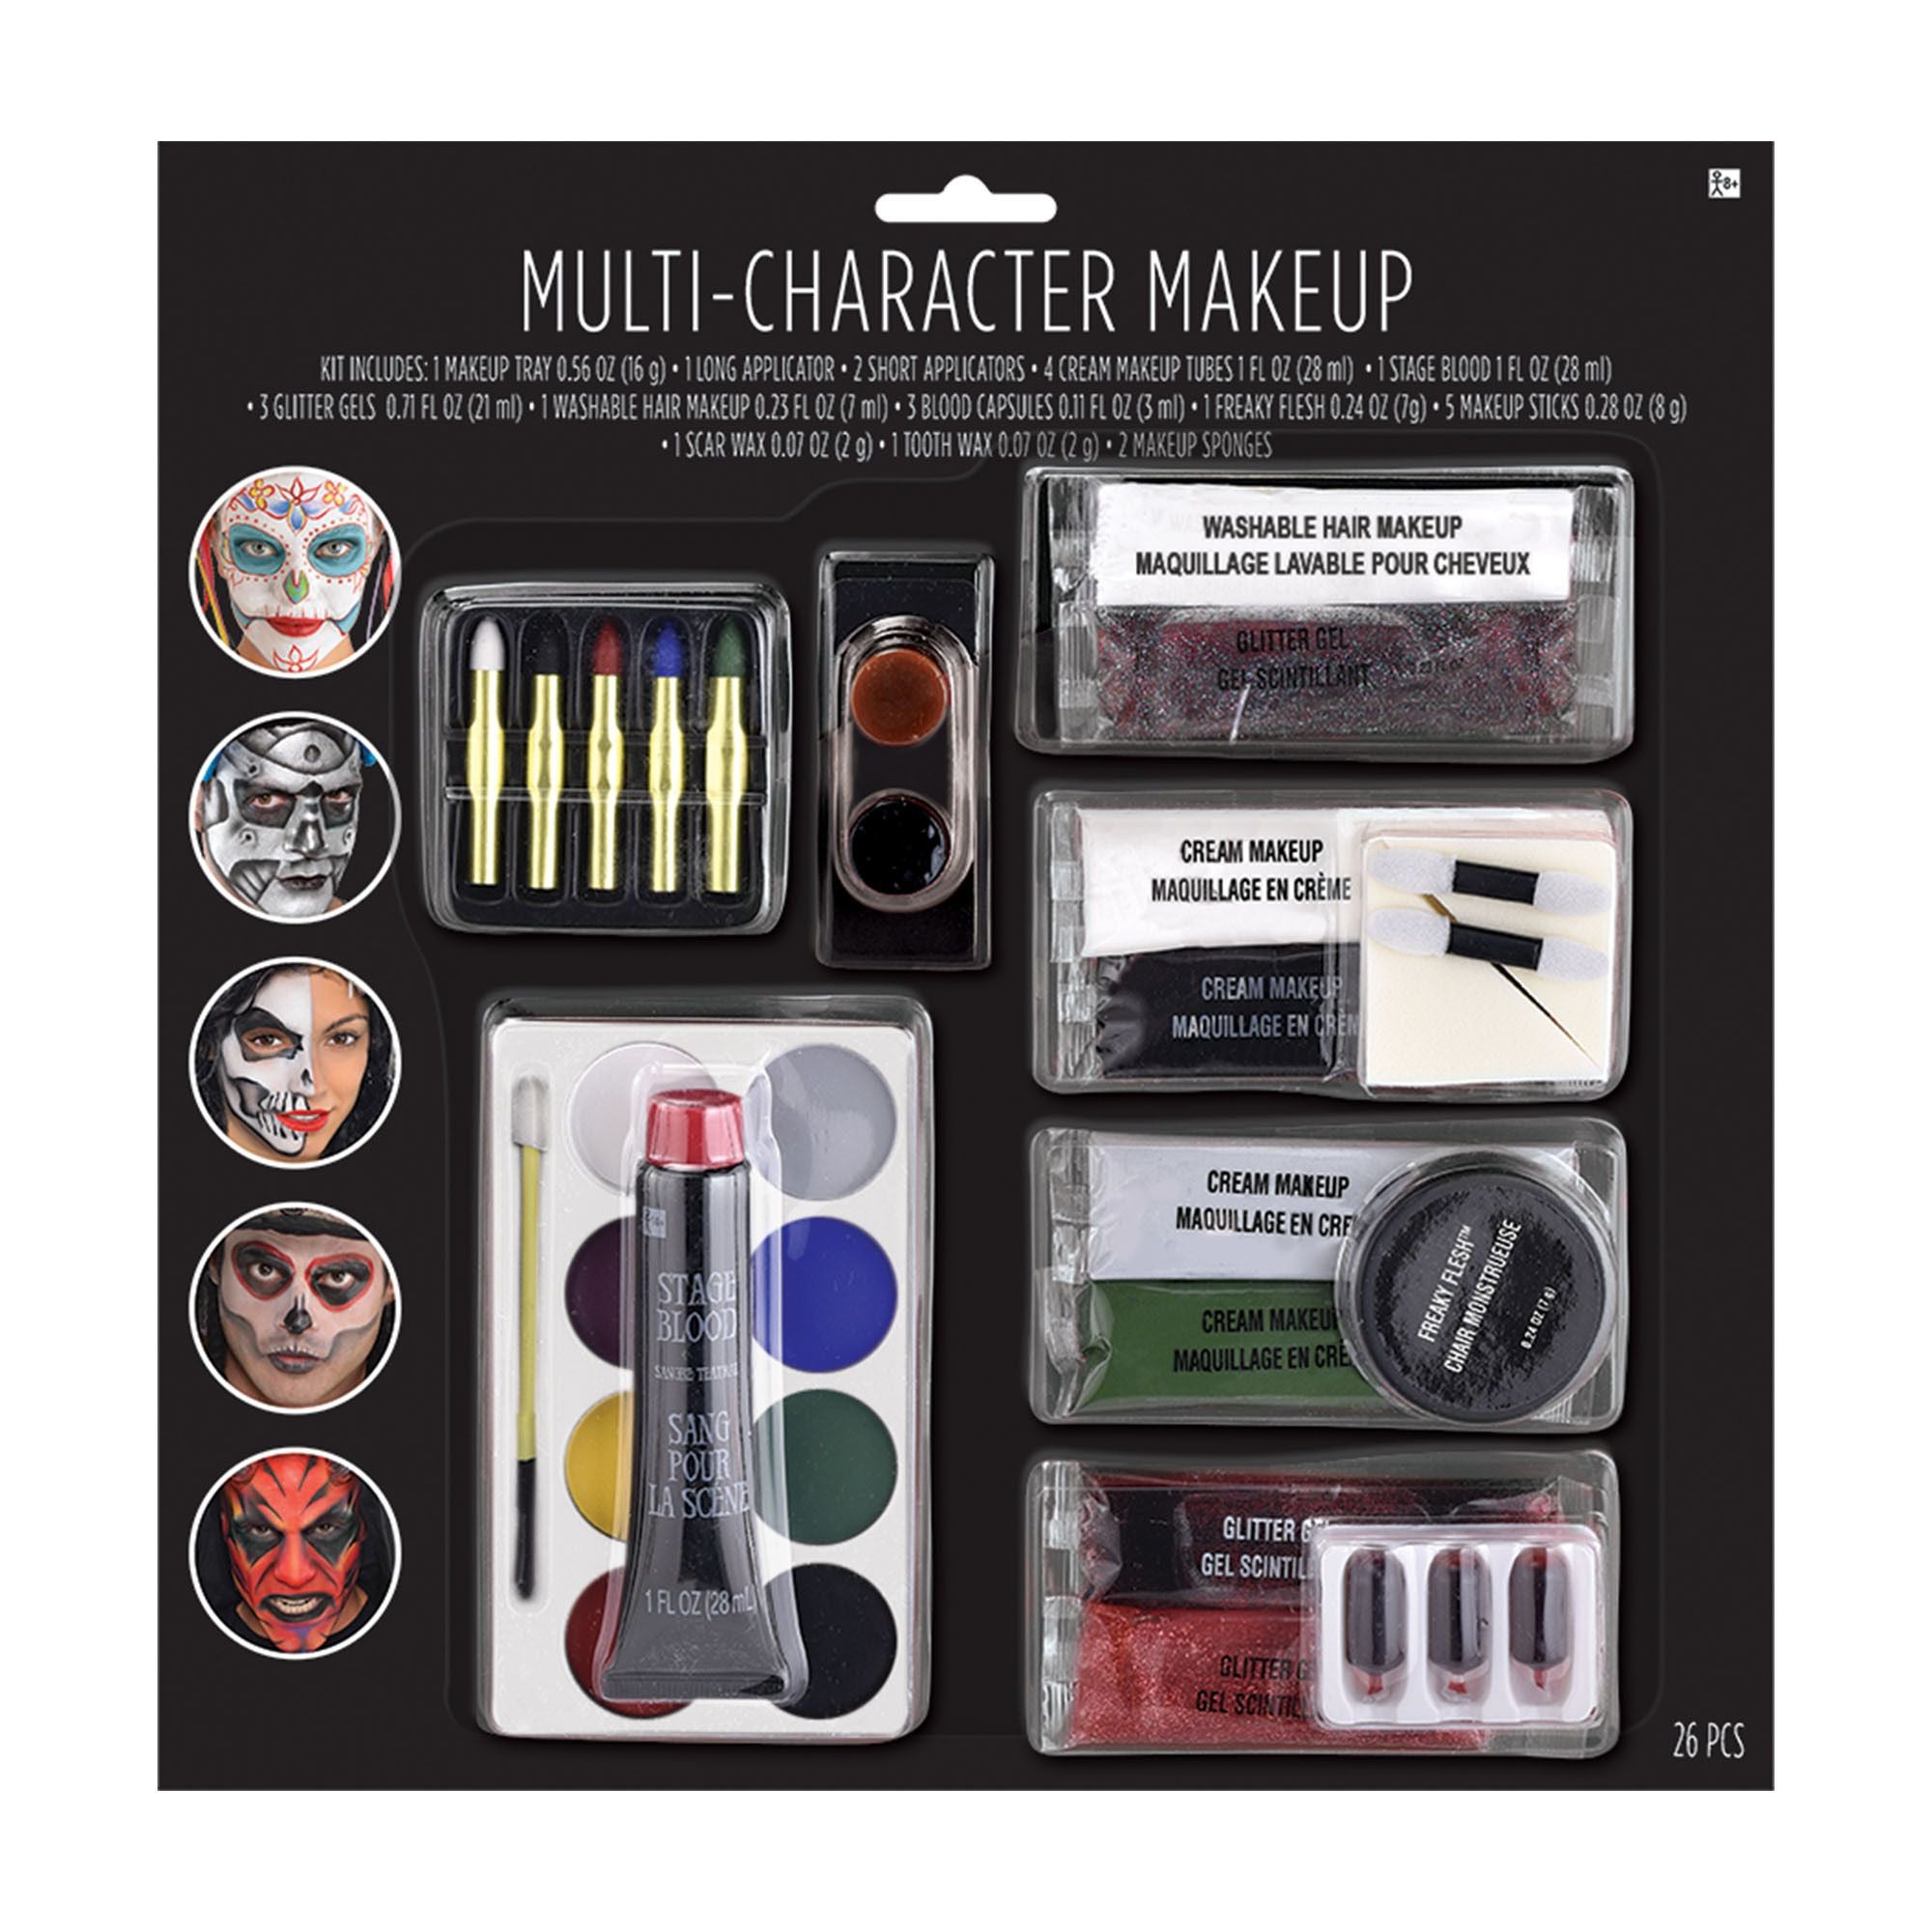 Amscan COSTUMES: MAKE-UP Multi-Character Makeup Kit